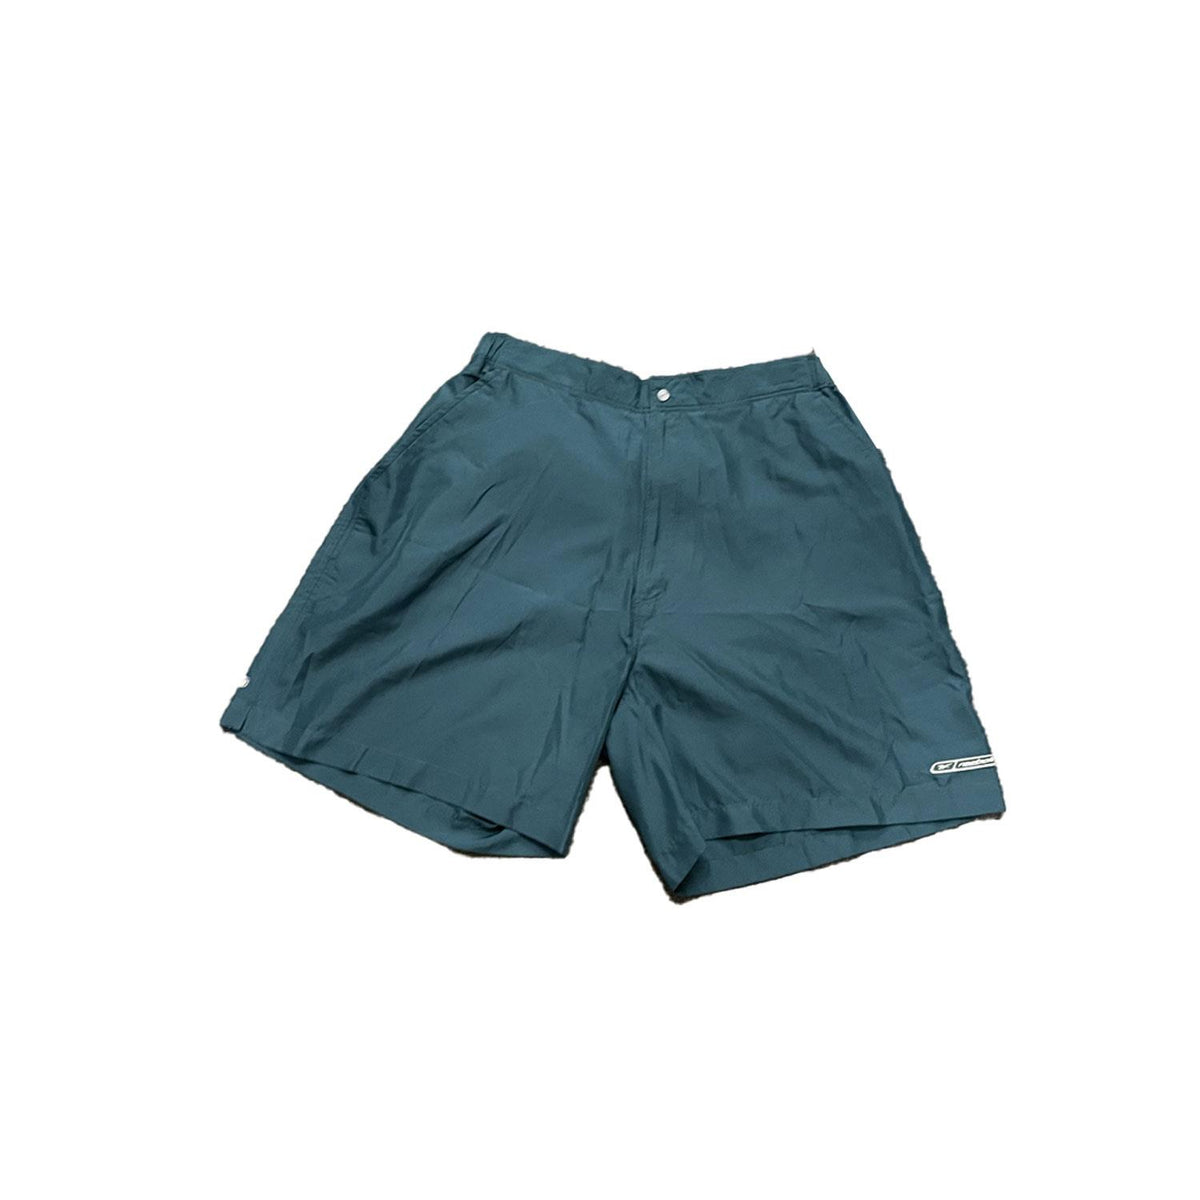 Reebok Original Mens Casual Sport Shorts - Teal - Medium